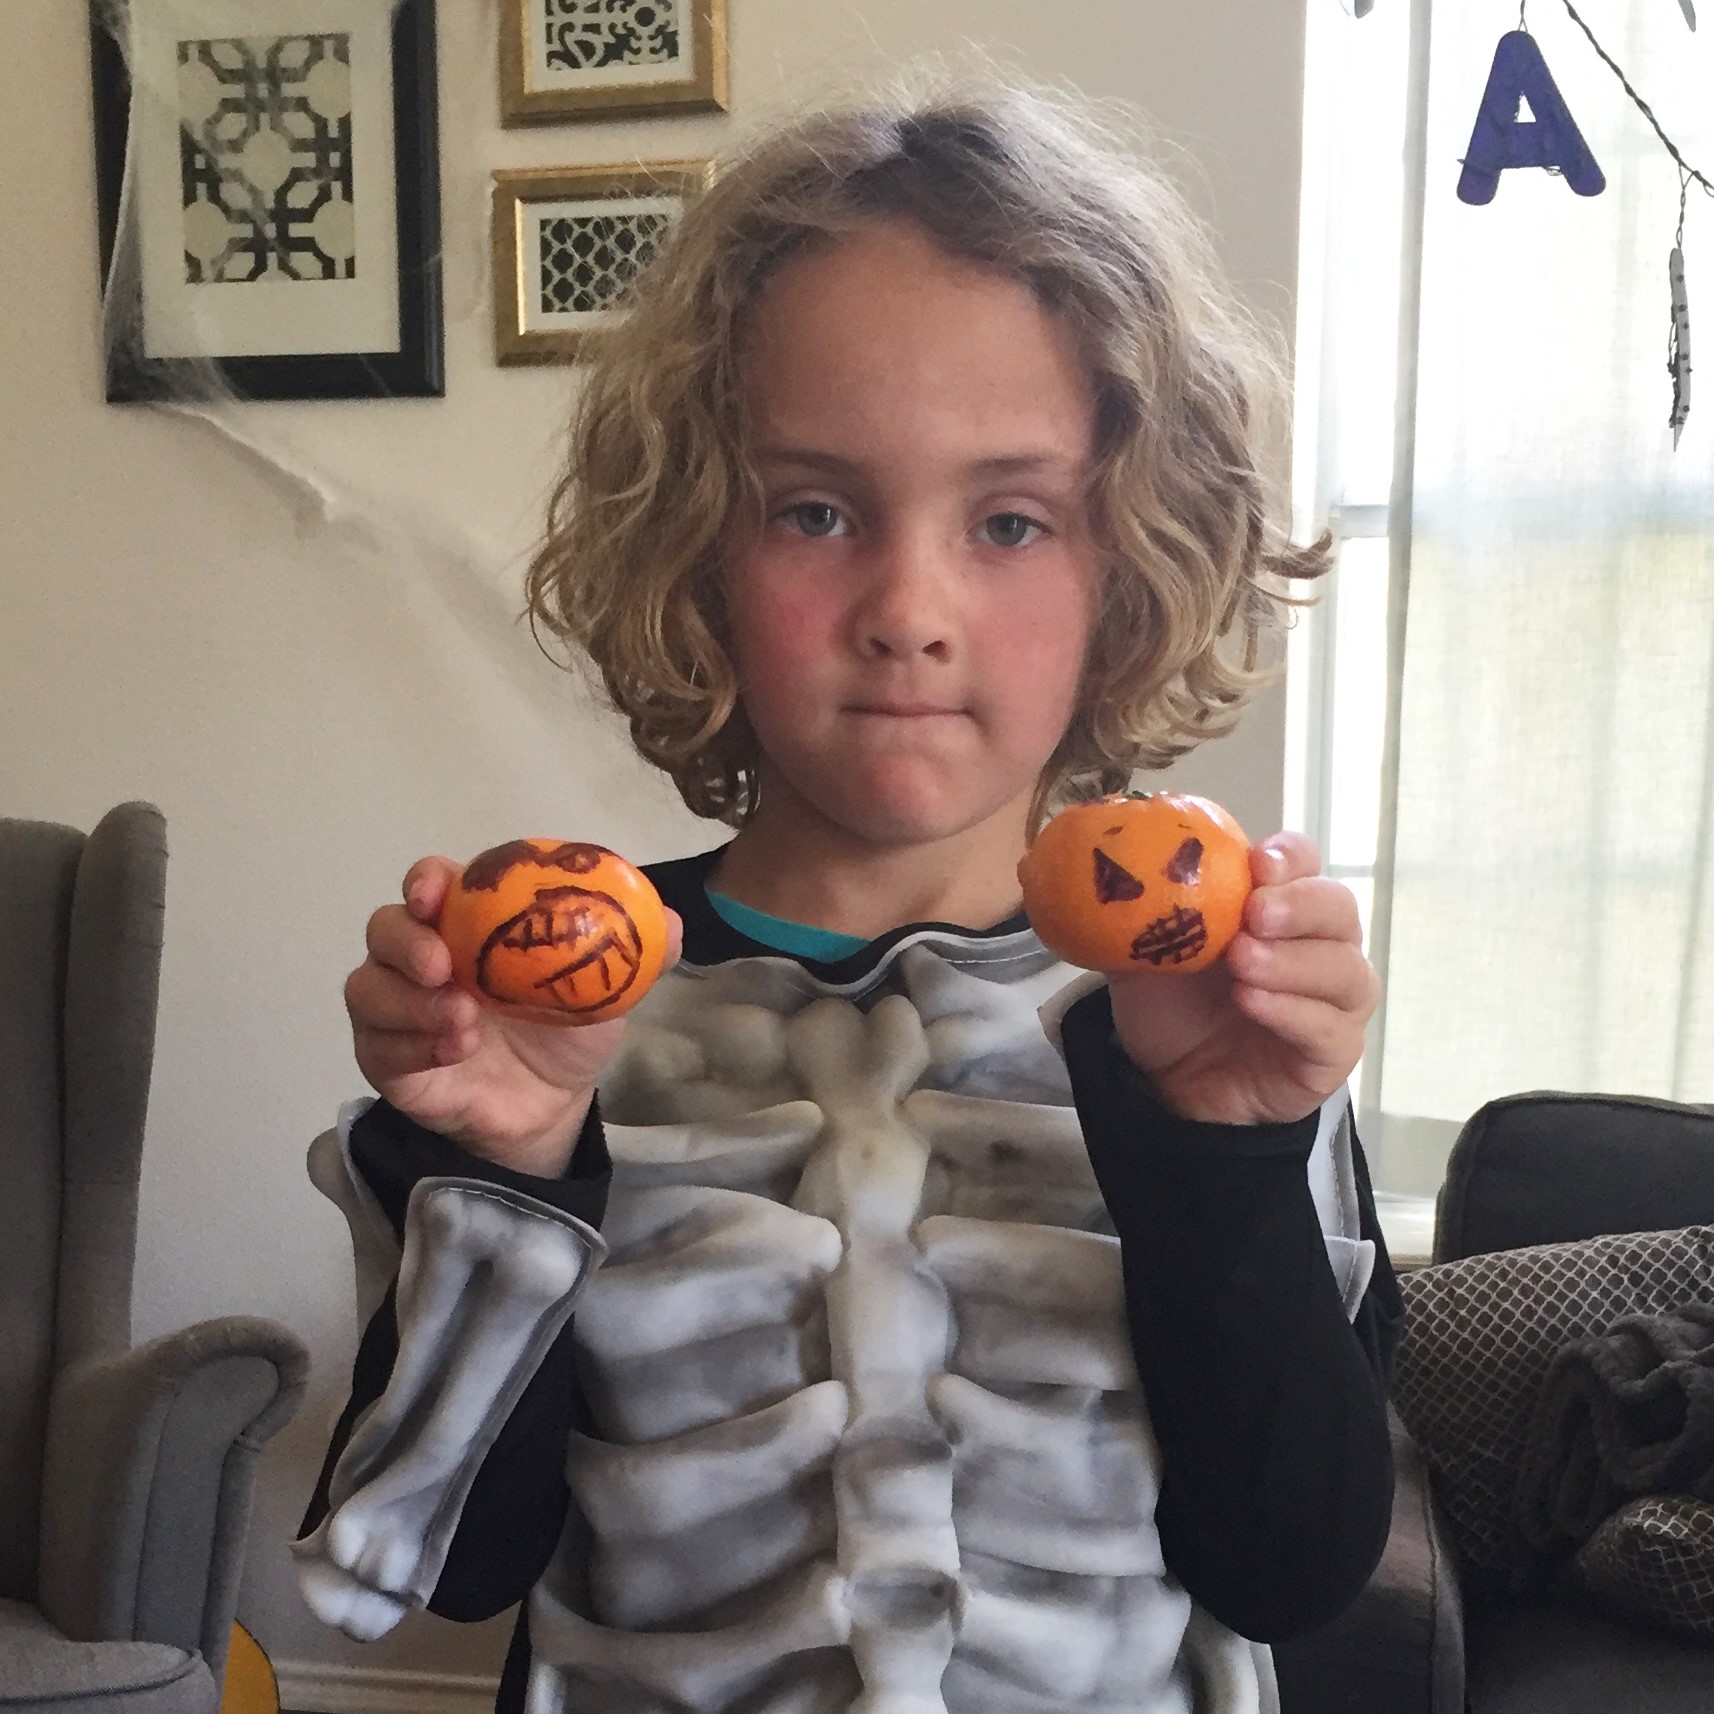 kid-friendly, fun Halloween treats for parties: make a jack-o-lantern mandarin orange